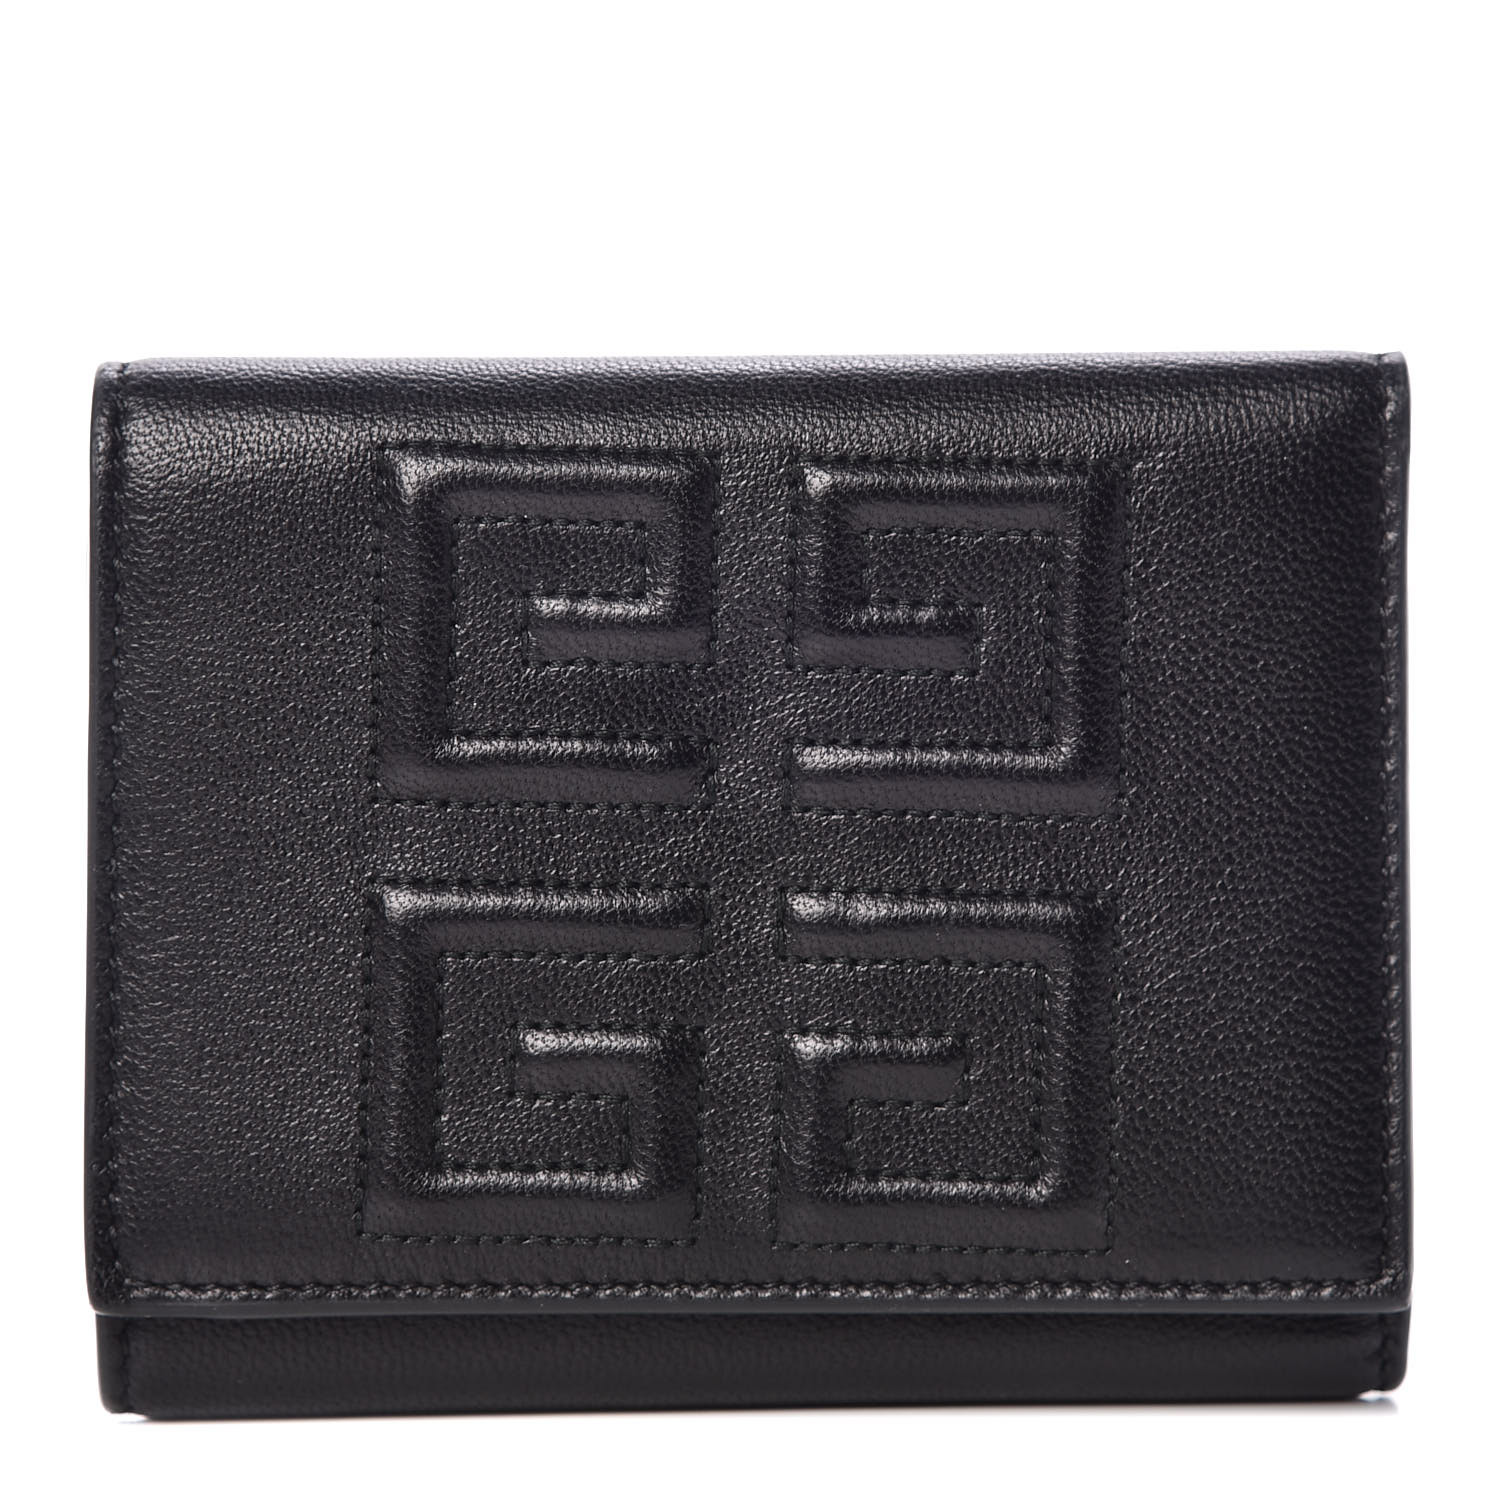 givenchy emblem wallet